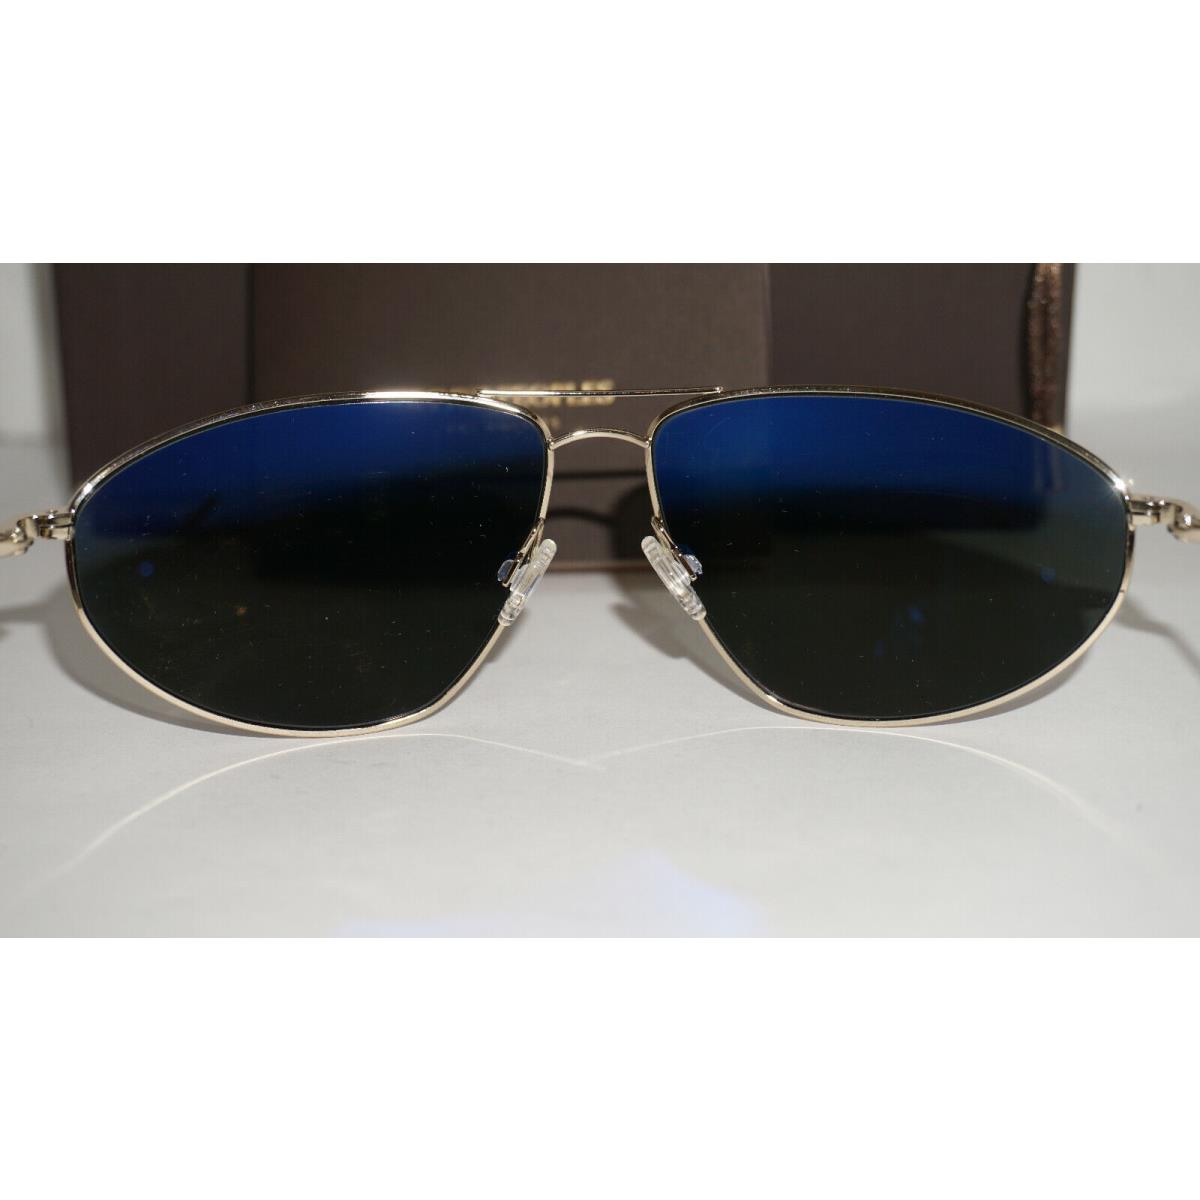 Oliver Peoples sunglasses  - Kallen Gold Frame, Green Polarized Lens 8